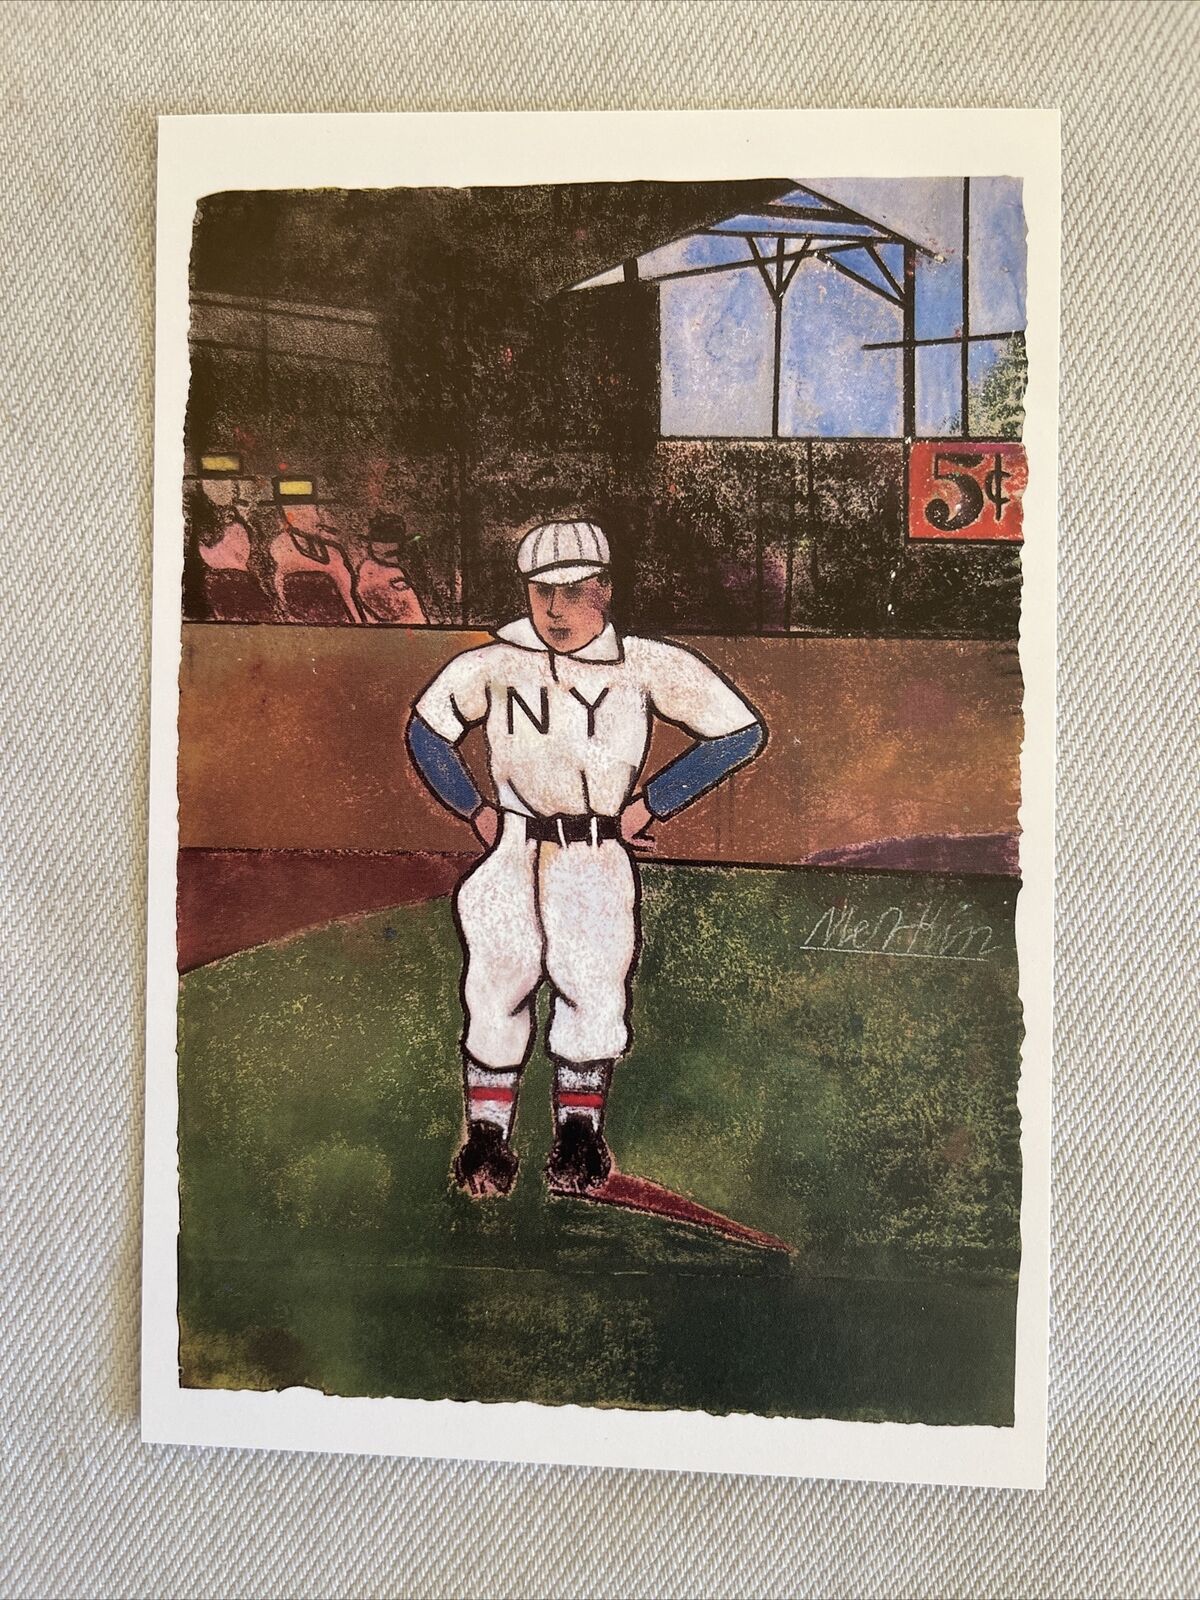 Moonlight Graham Postcard by Richard Merkin - Baseball 1994